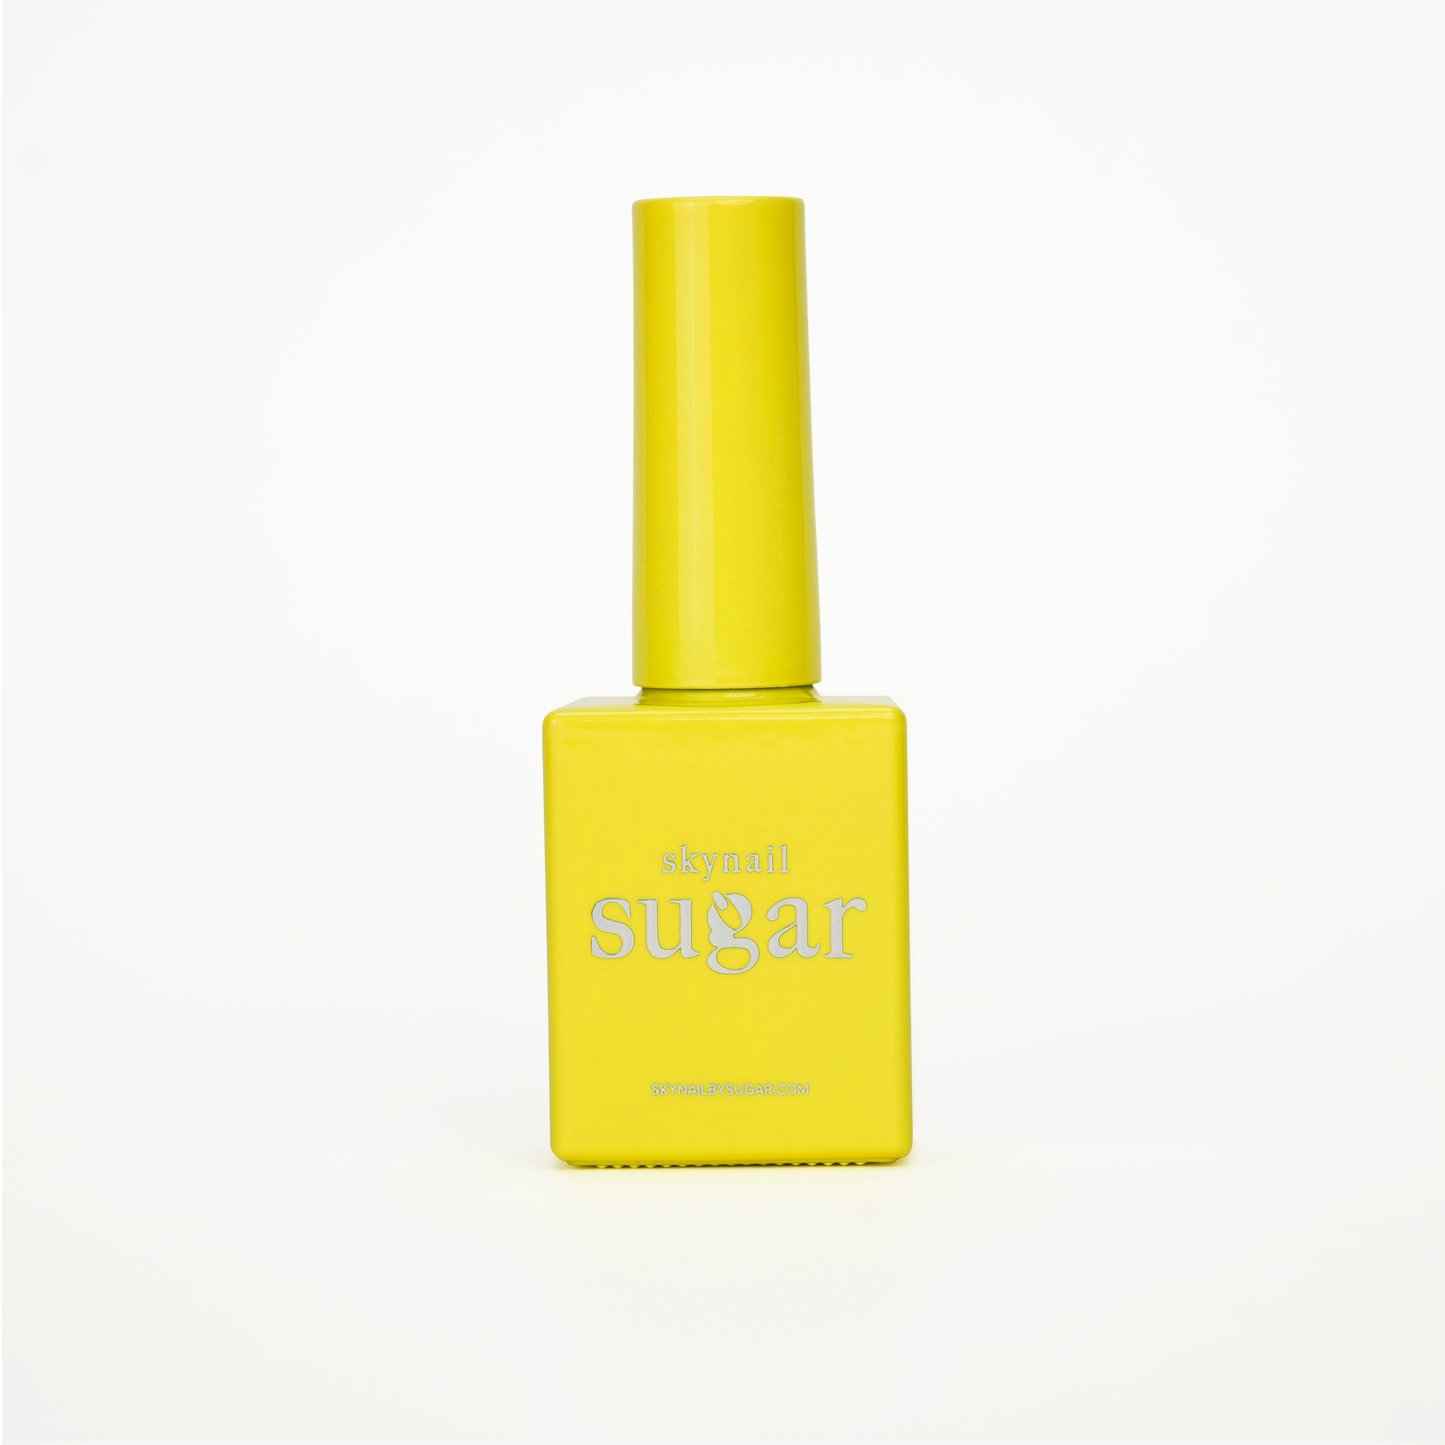 Bottle of rich yellow gel nail polish from Skynailbysugar